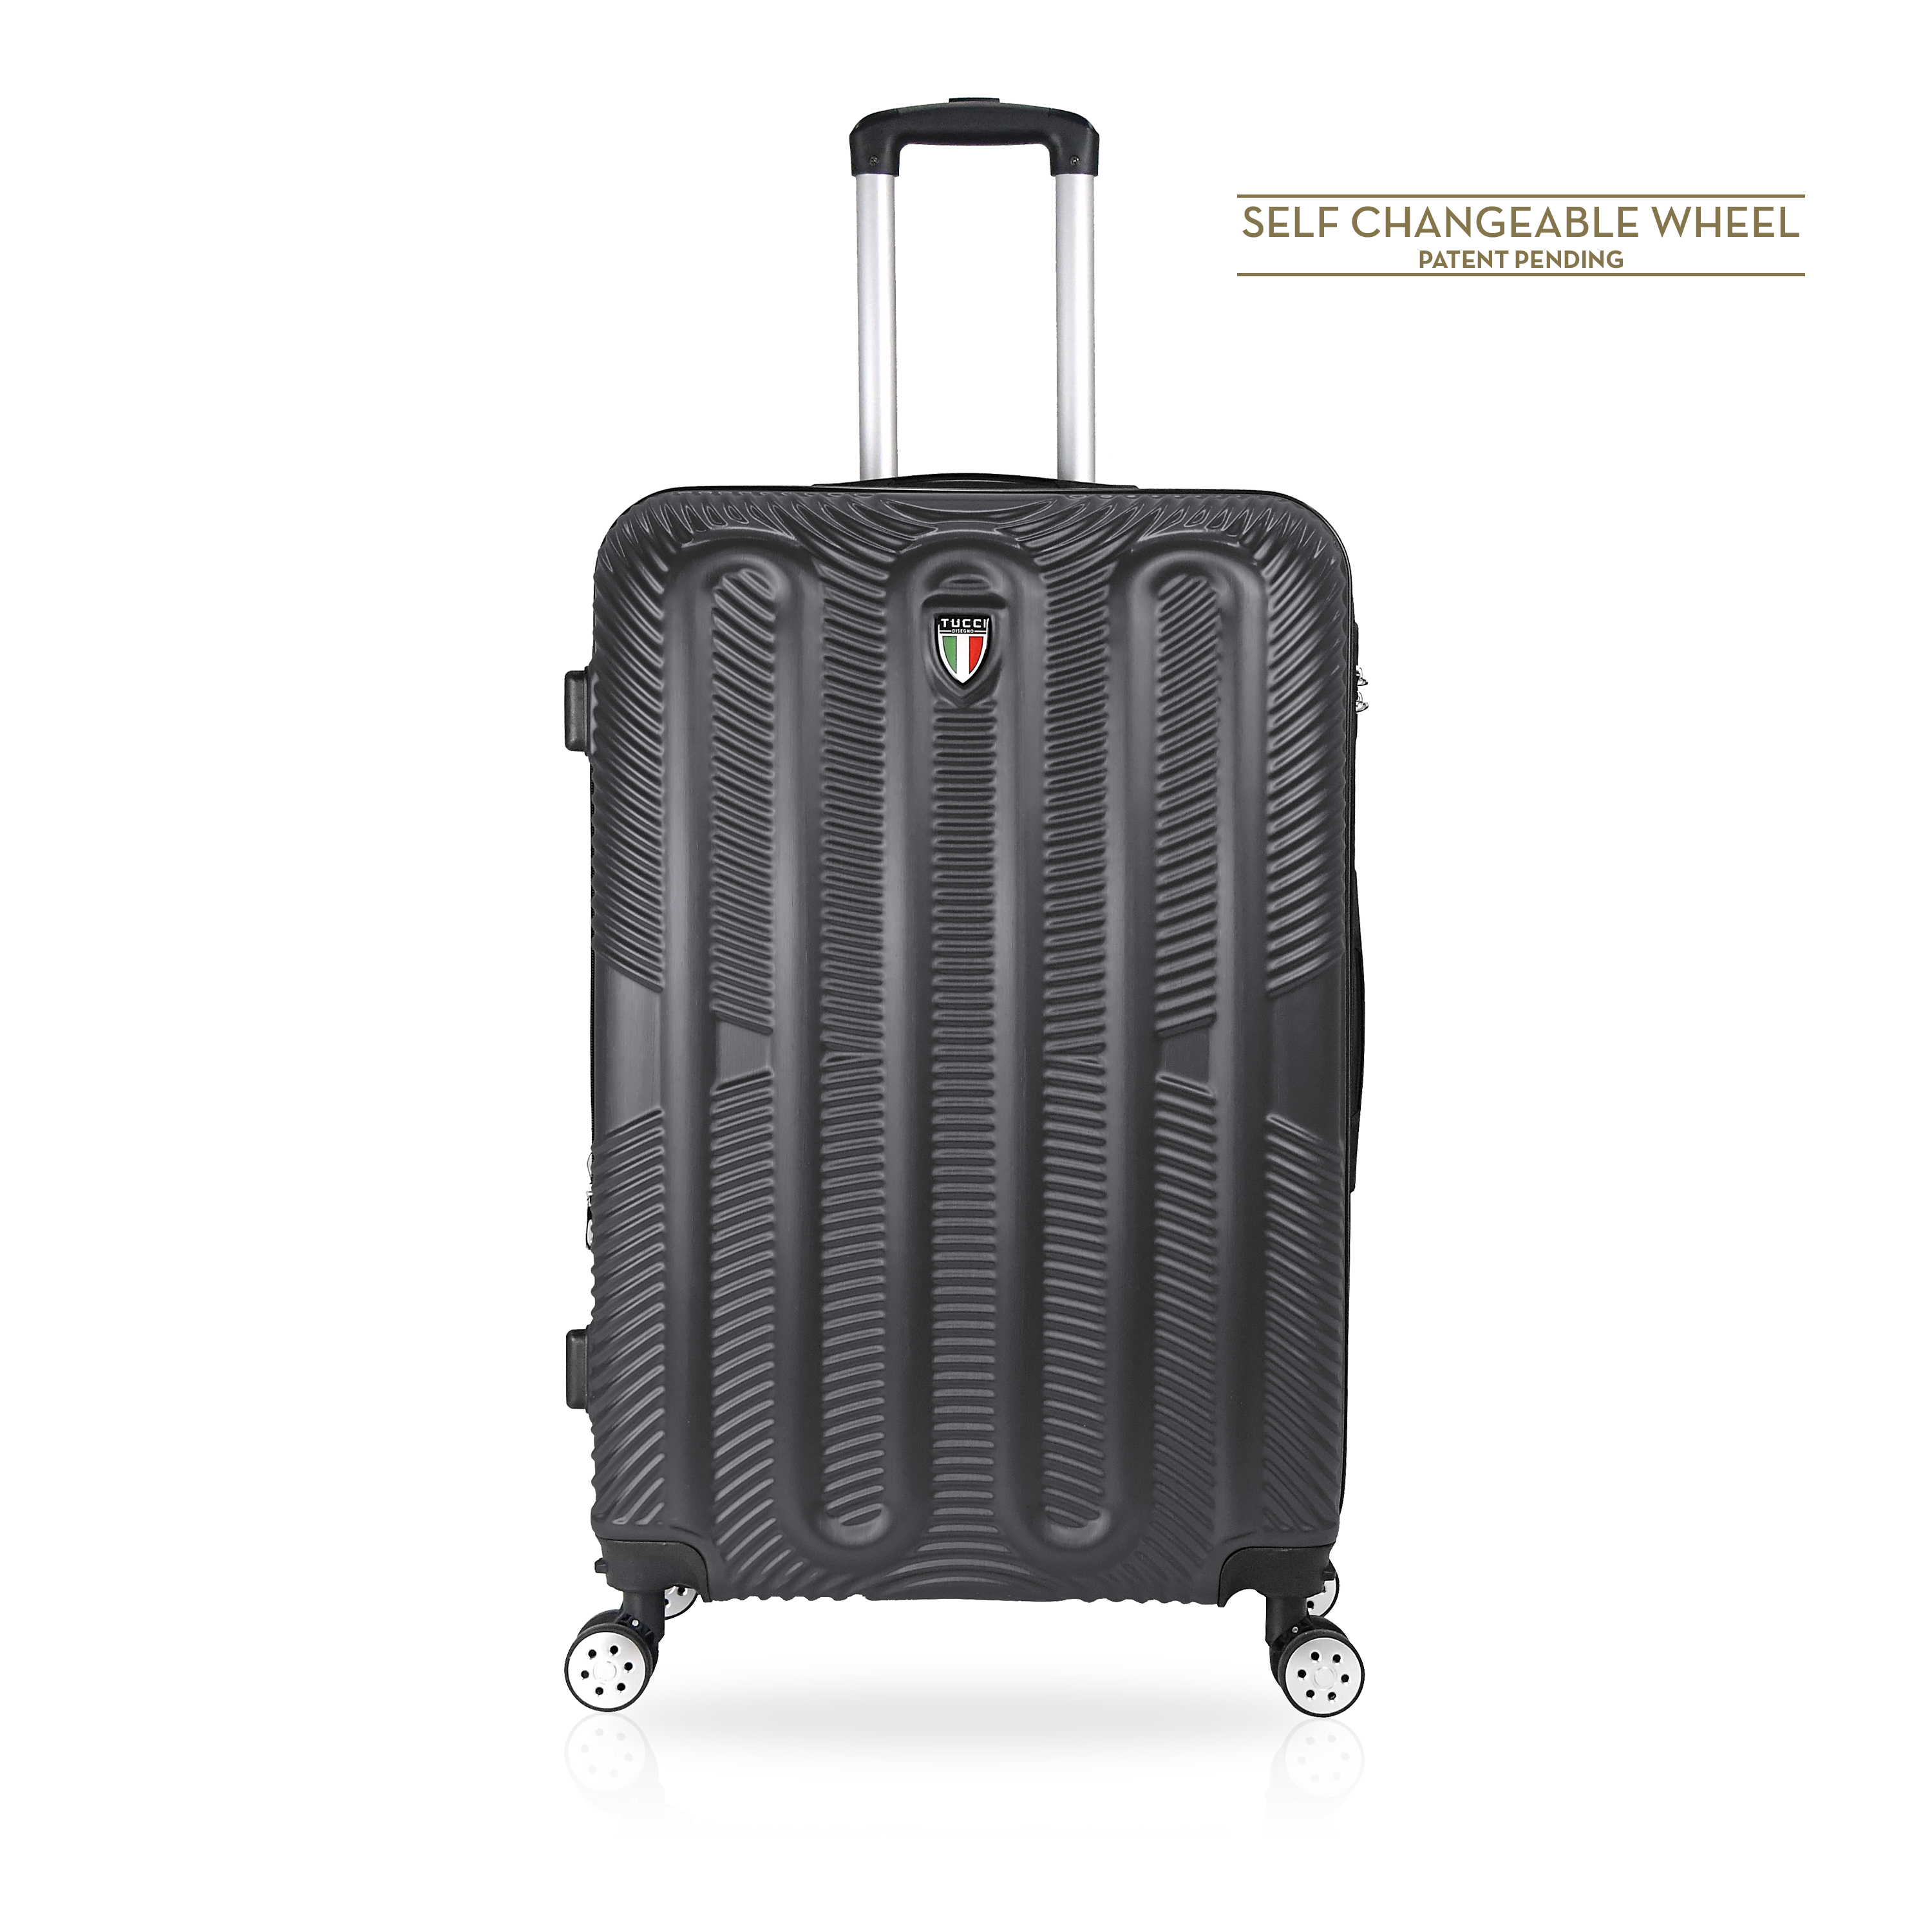 TUCCI Italy SPECIALI Luggage 30" Large Travel Suitcase